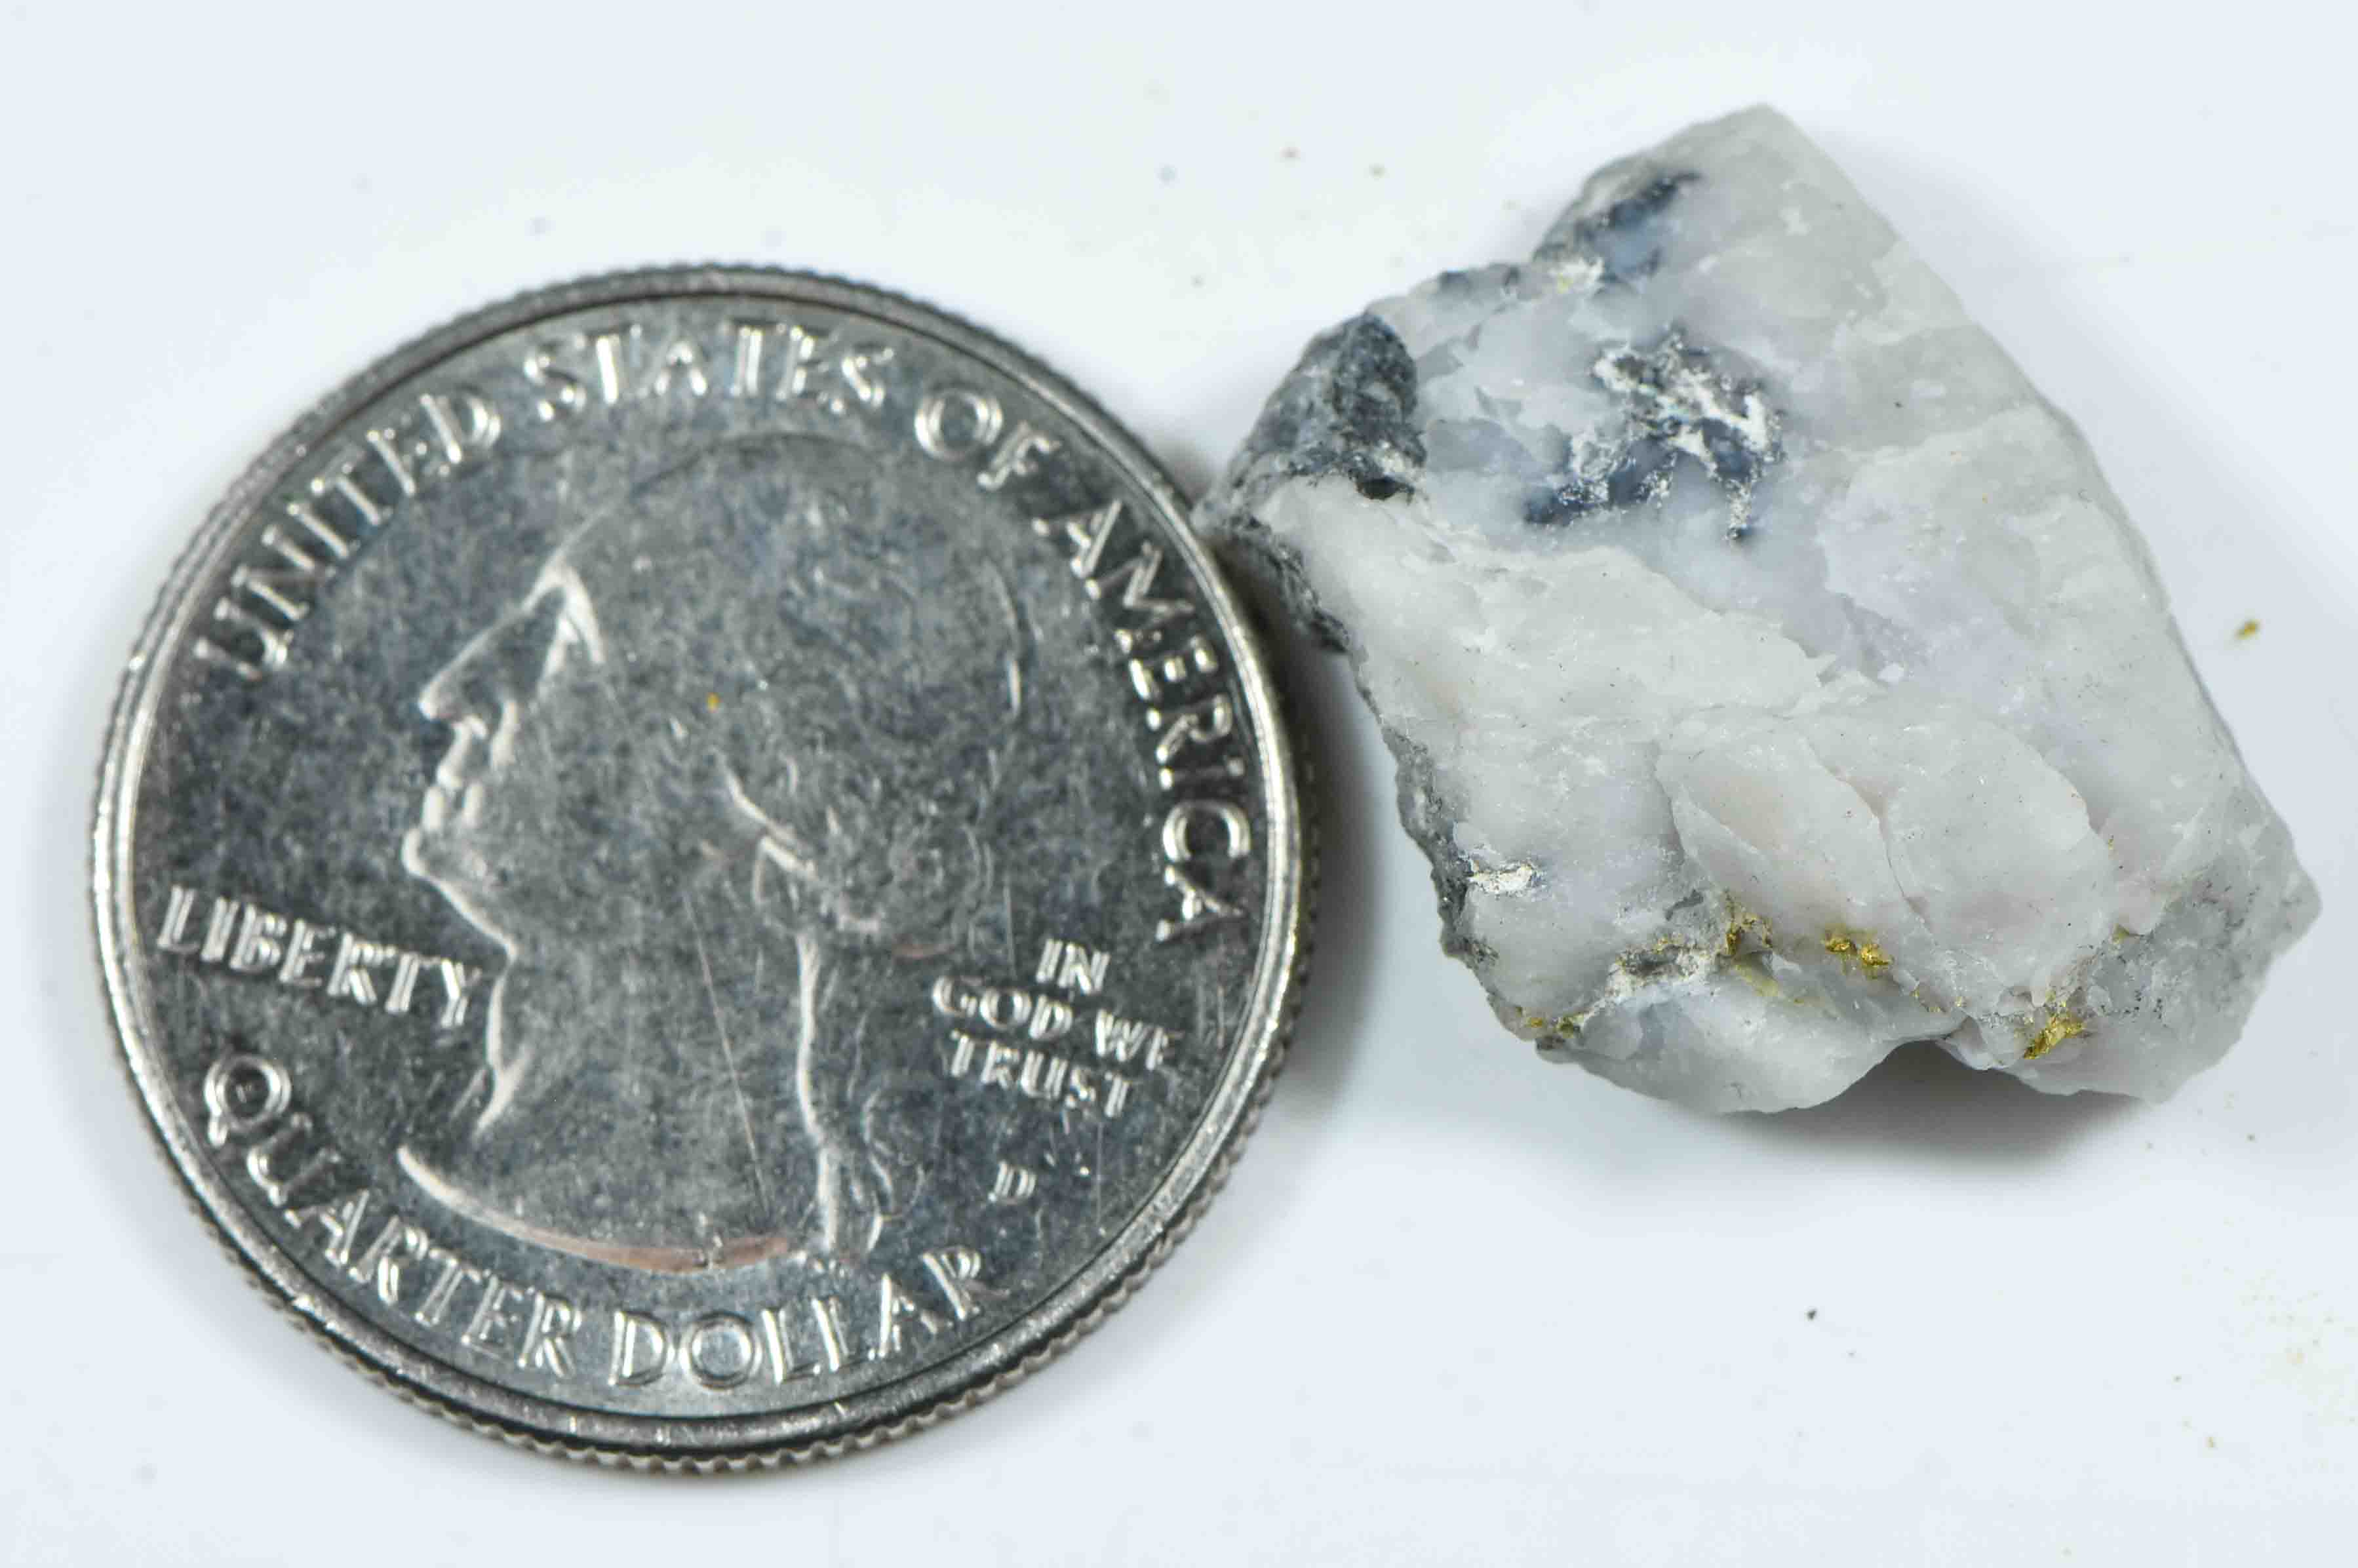 #OM-51 Crystalline Gold Nugget Specimen 3.79 Grams Oriental Mine Sierra County California Rare